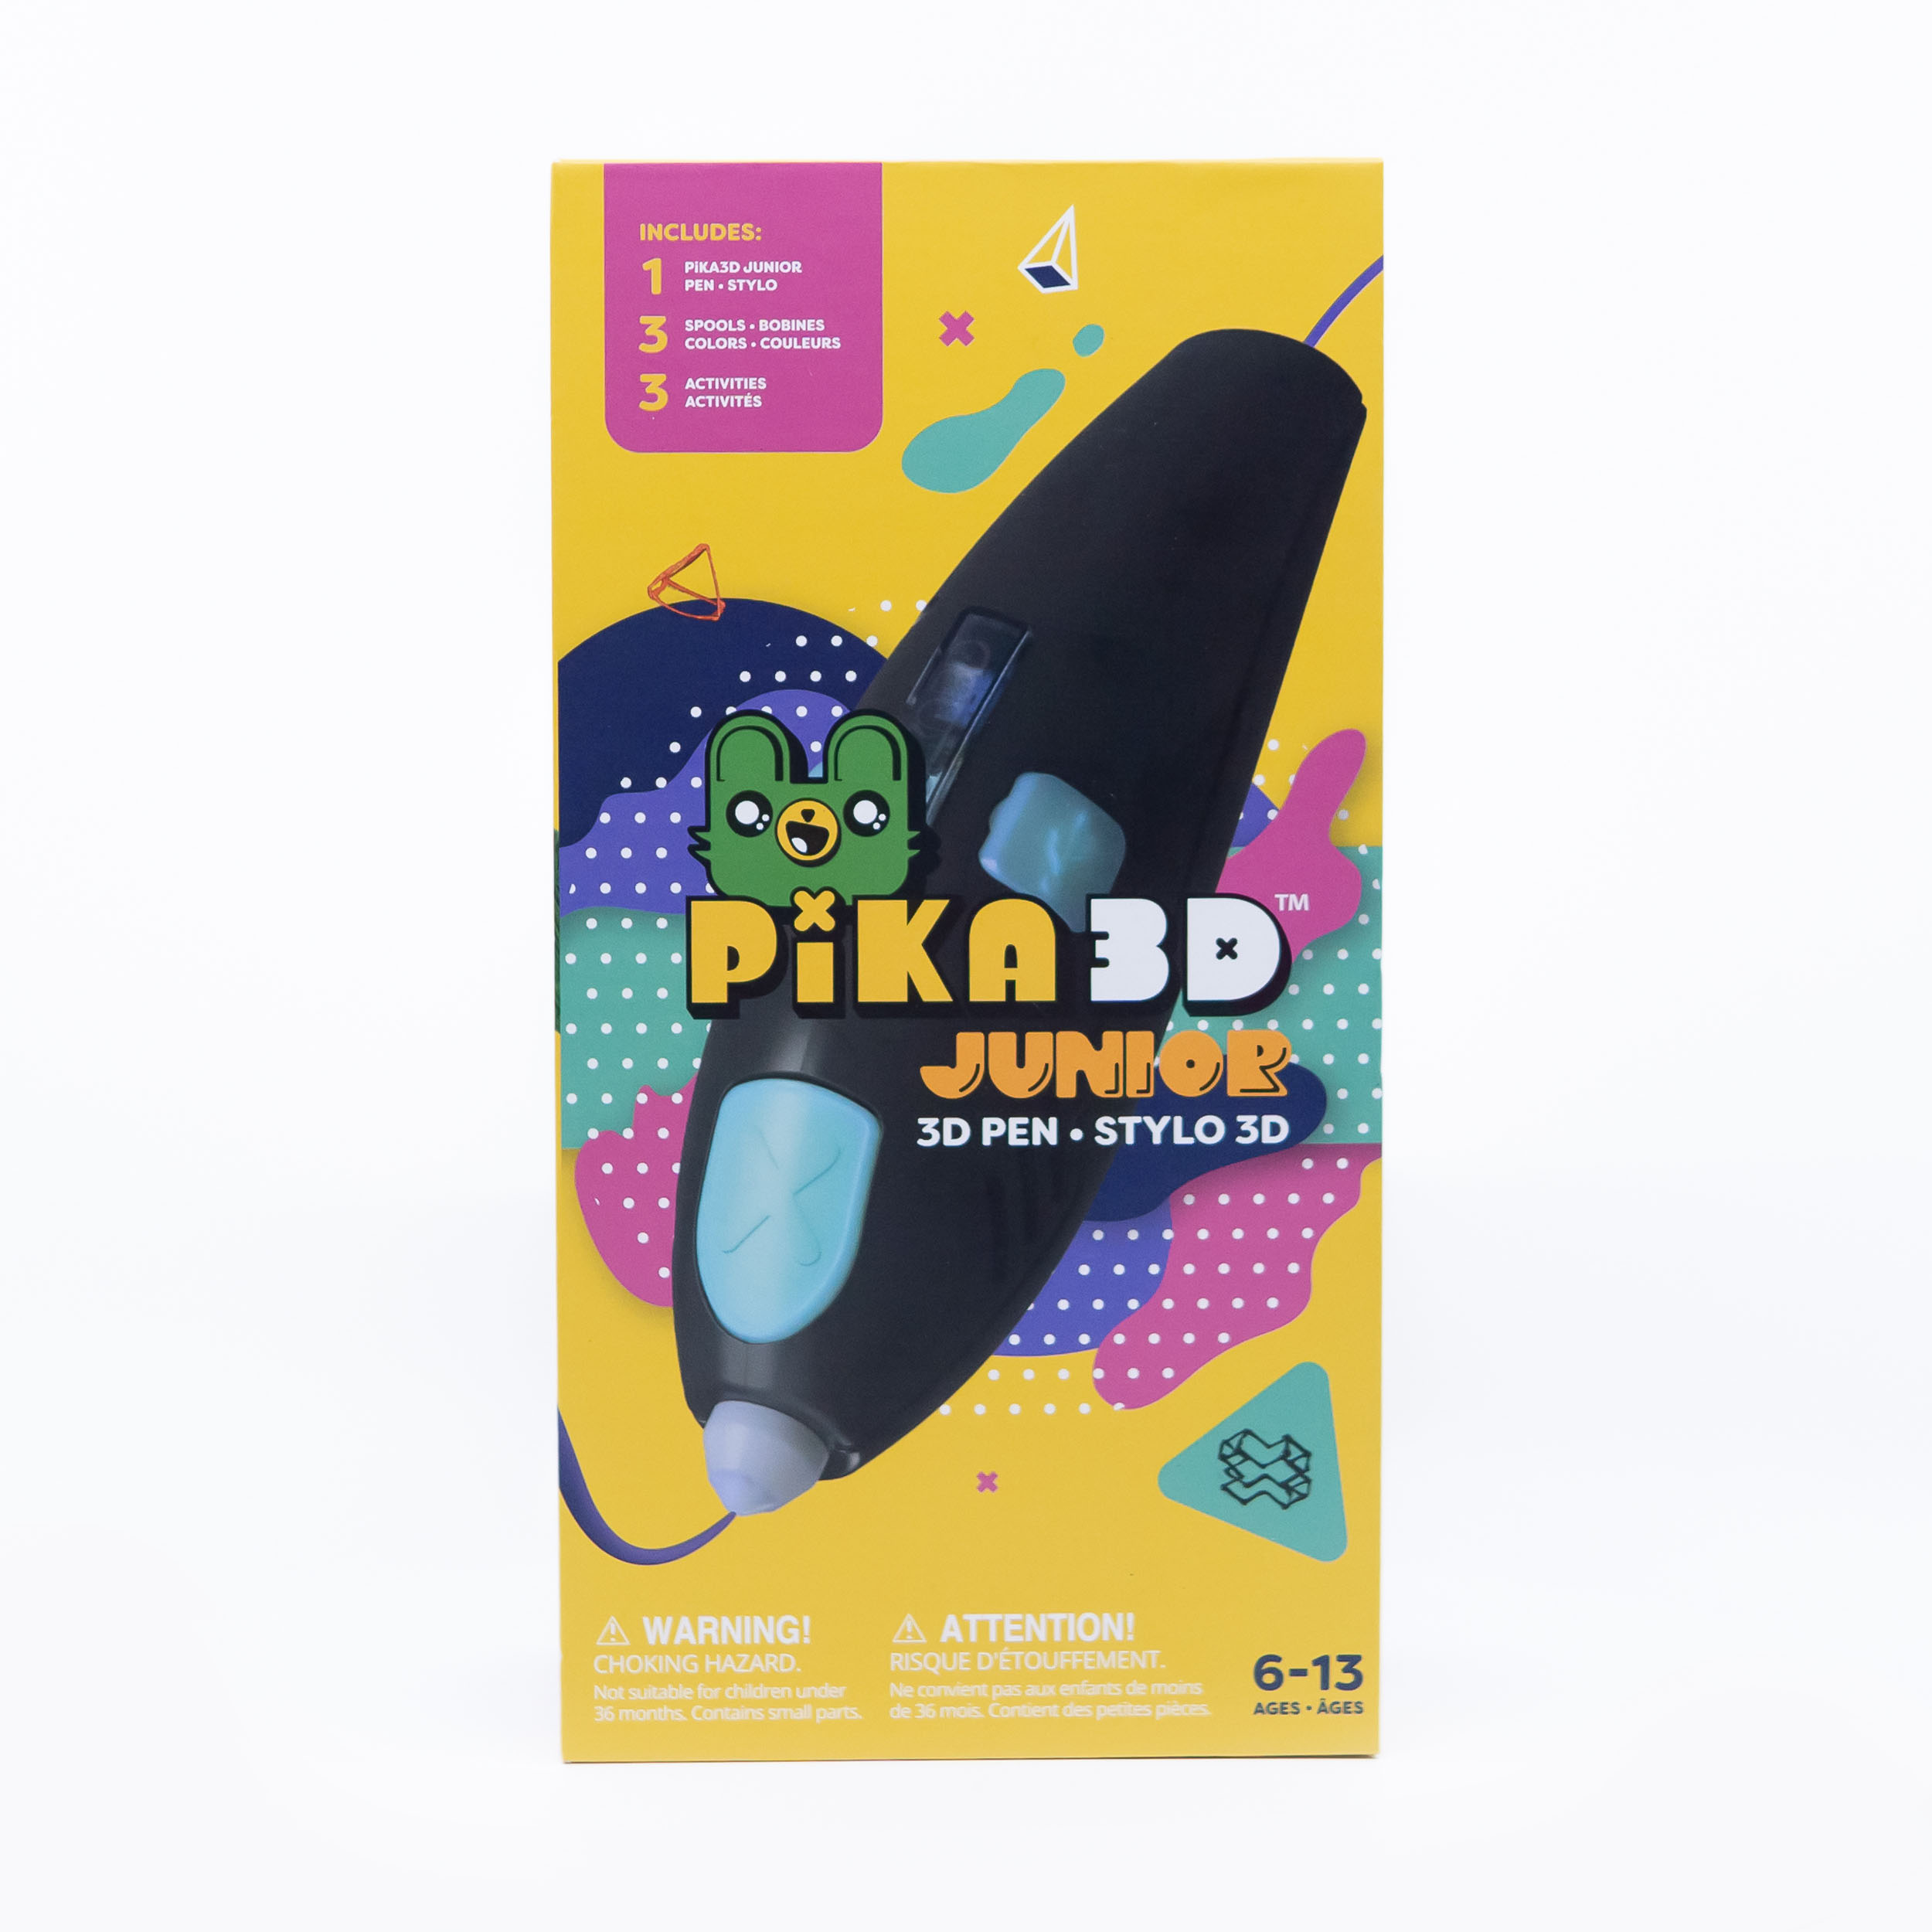 PIKA3D Super 3D PRINTING PEN - Includes 3D Pen, 4 Colors of PLA Filament  Refill with Stencil Guide and User Manual